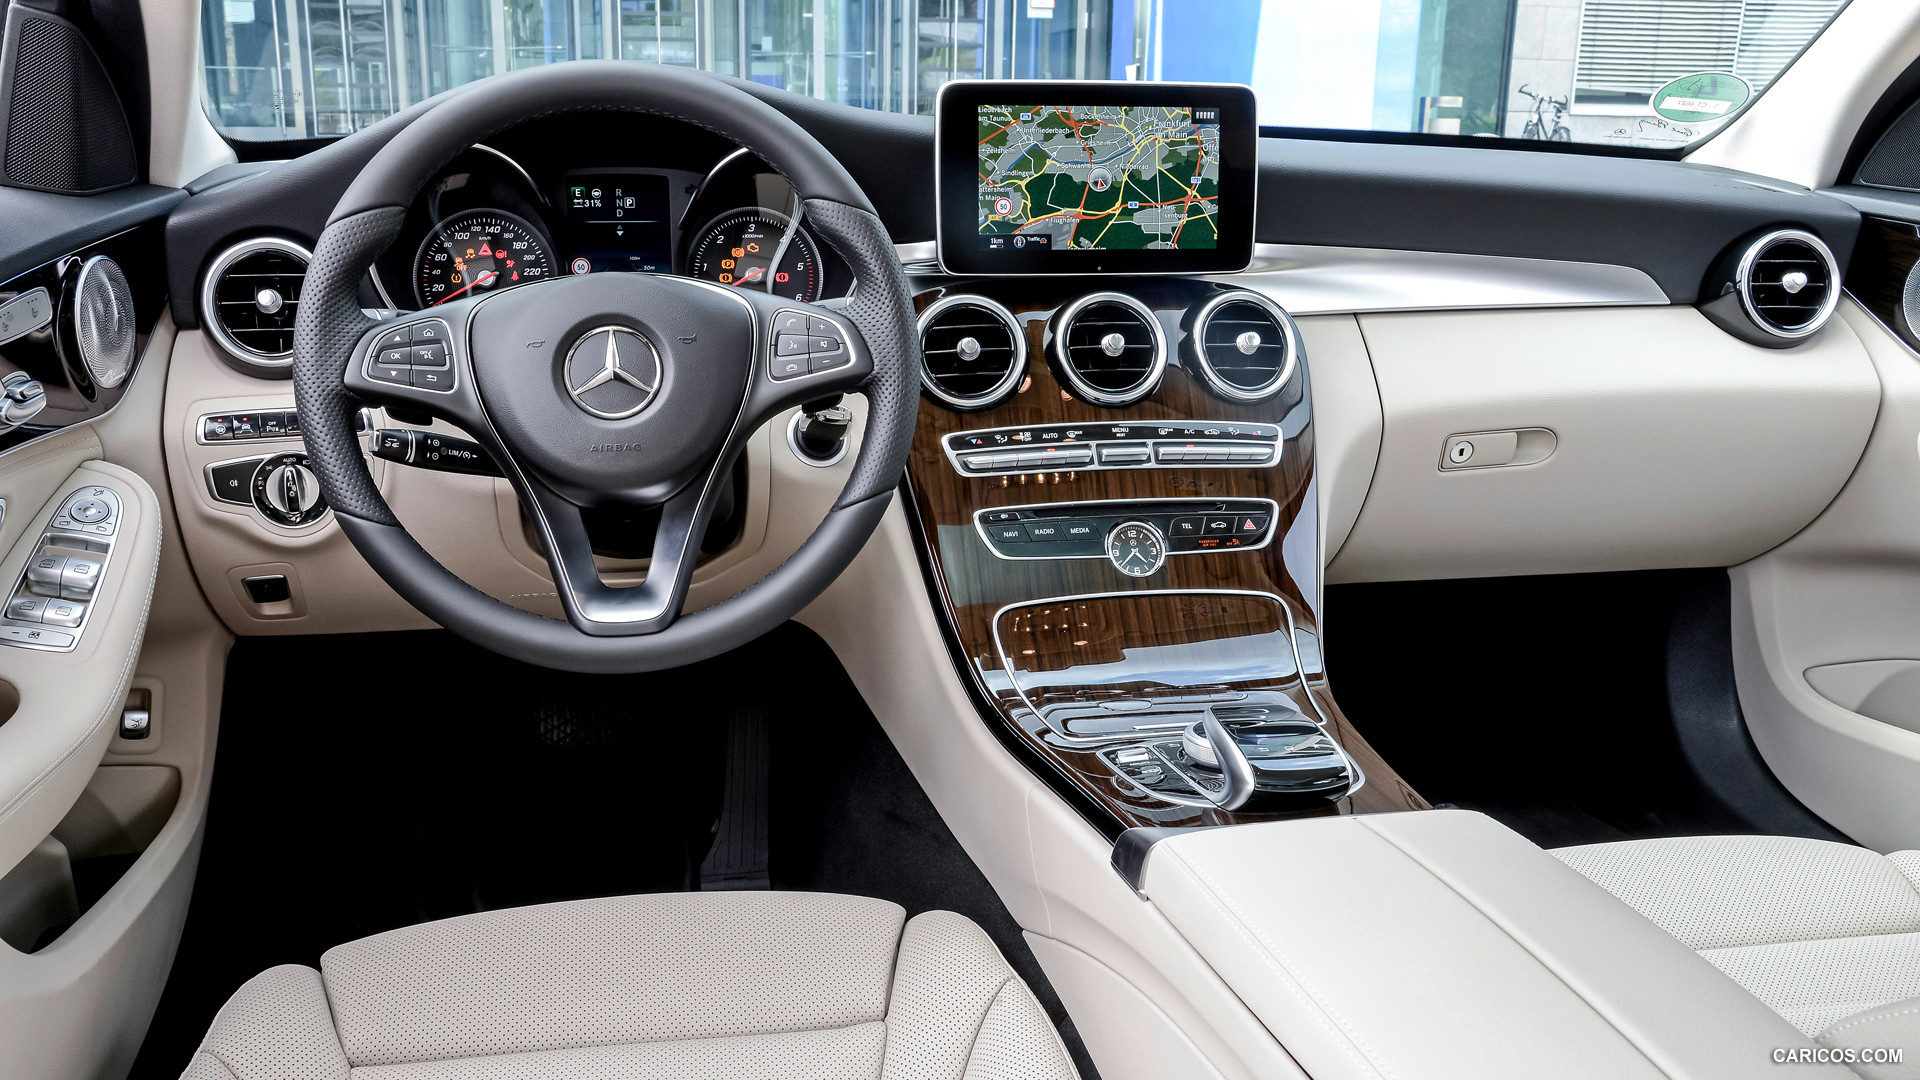 2015 Mercedes-Benz C-Class C 300 BlueTEC HYBRID Estate (Avantgarde, Leather Beige) - Interior, #114 of 173